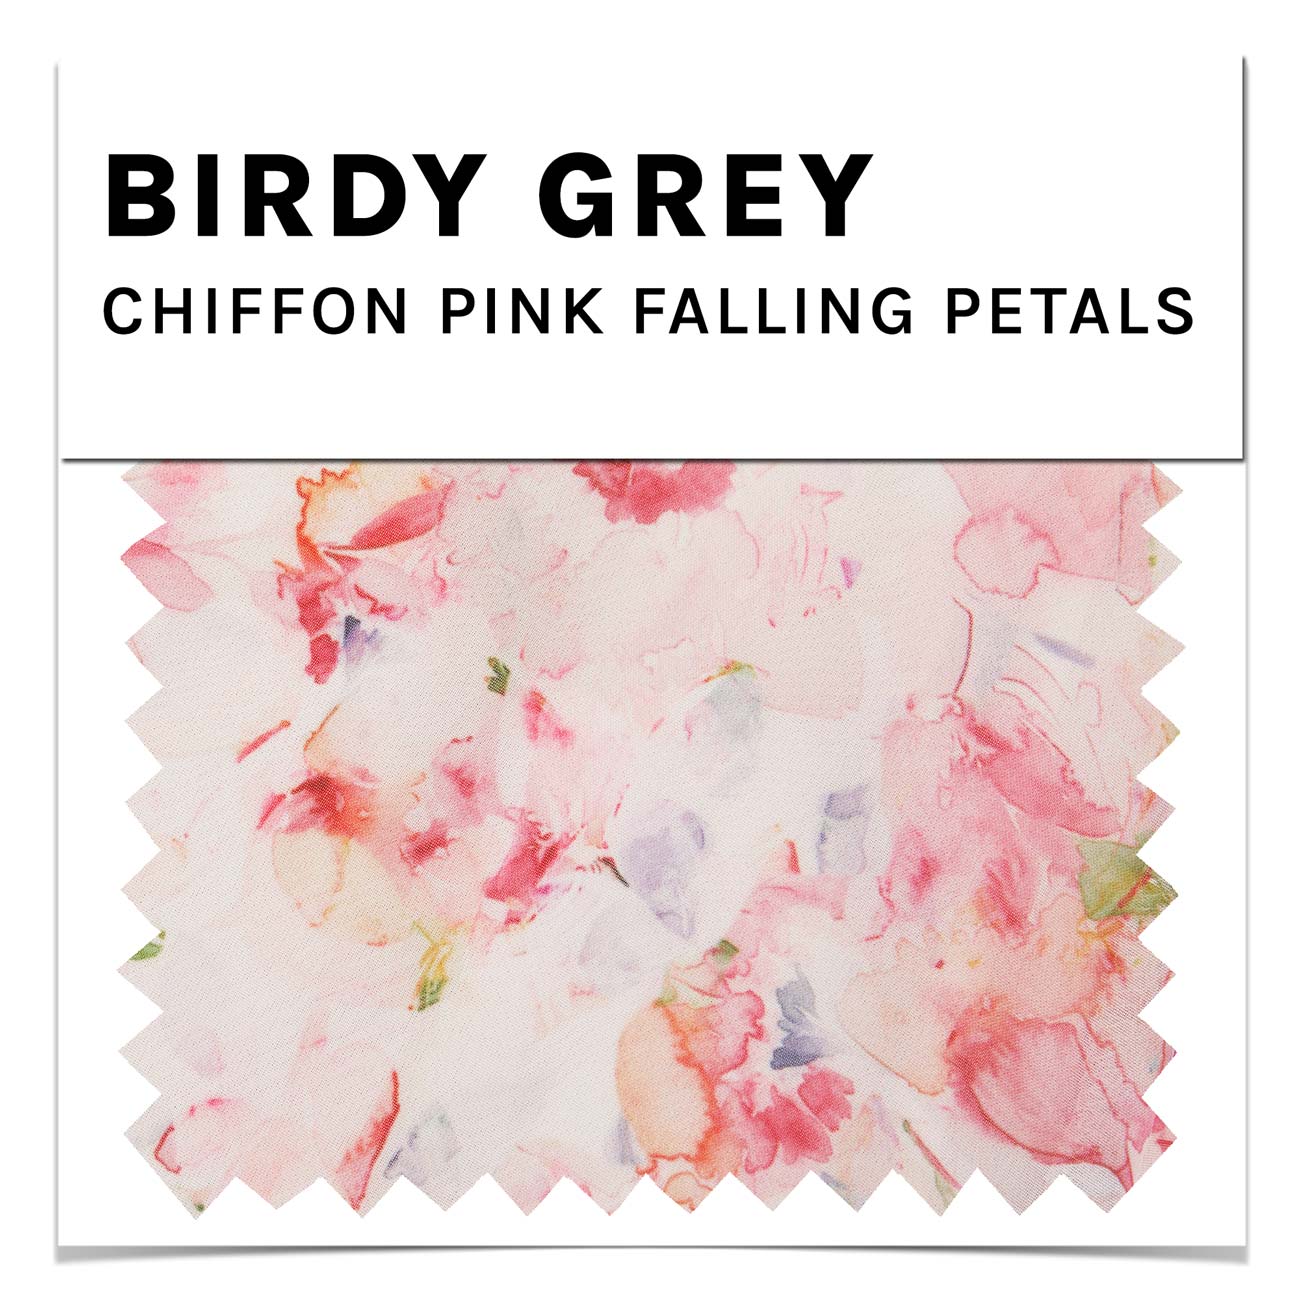 Pink Falling Petals Chiffon Swatch by Birdy Grey